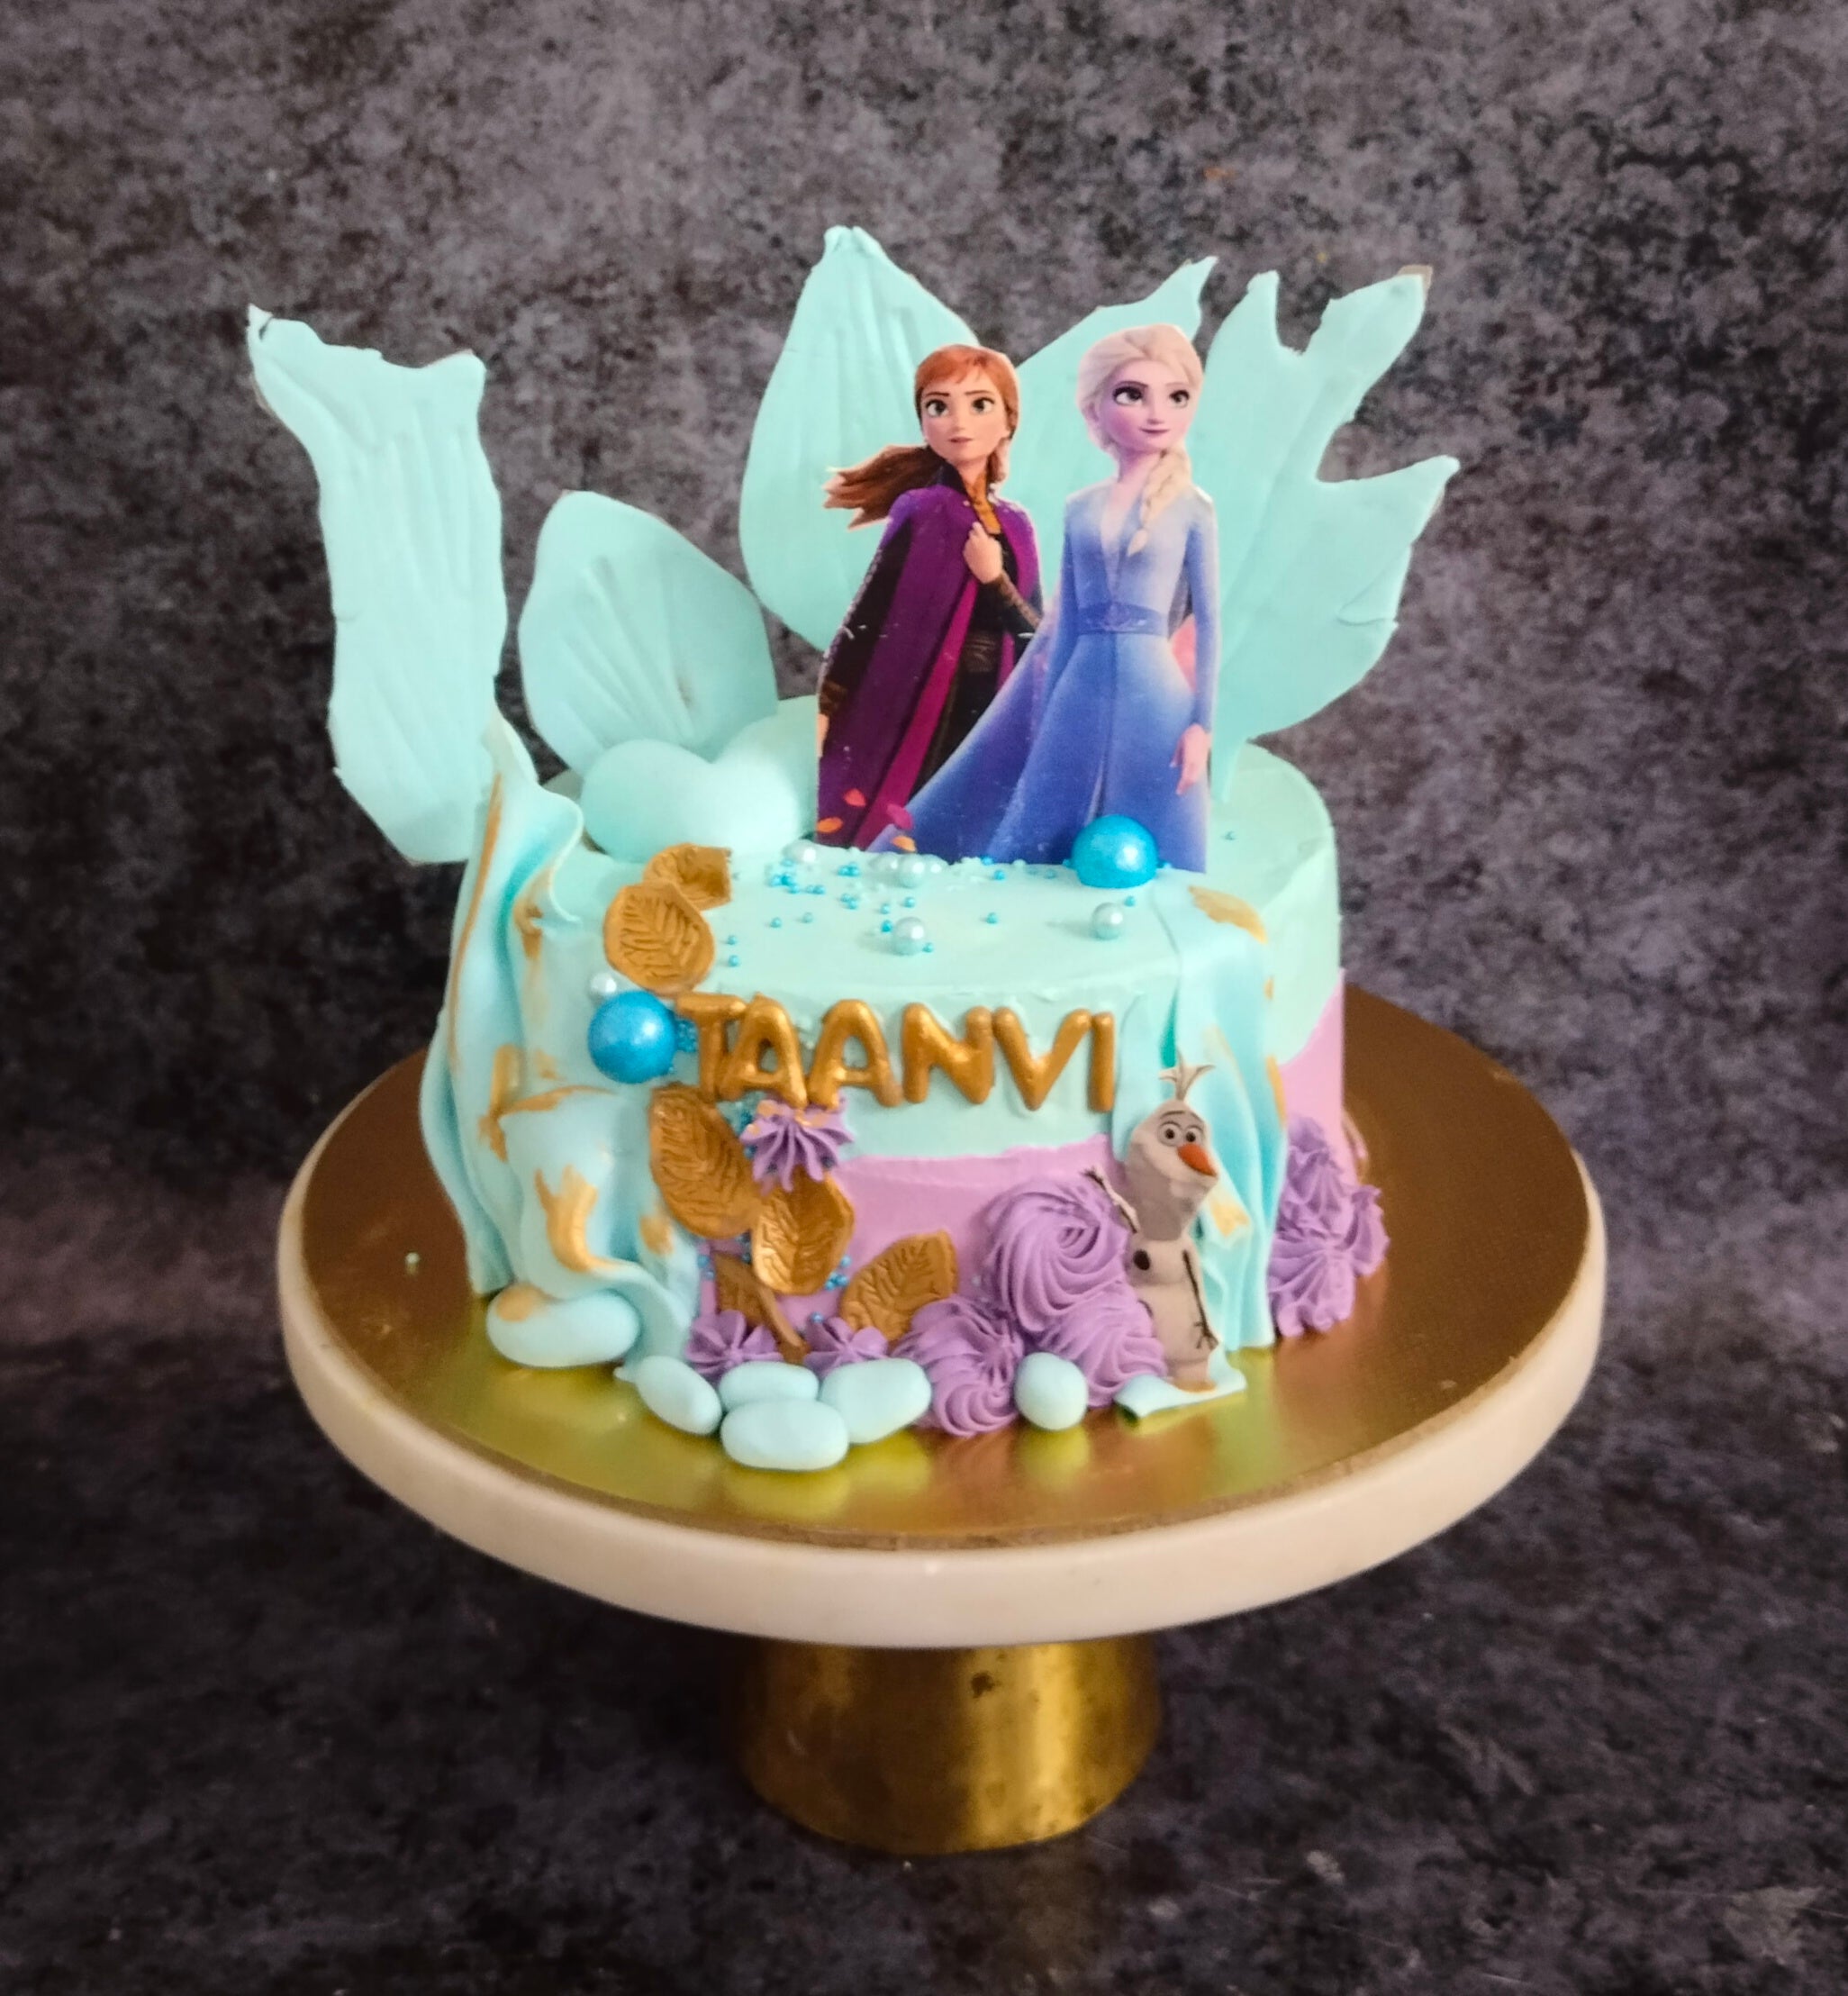 The Ultimate Disney Frozen Cake | The Banana Diaries